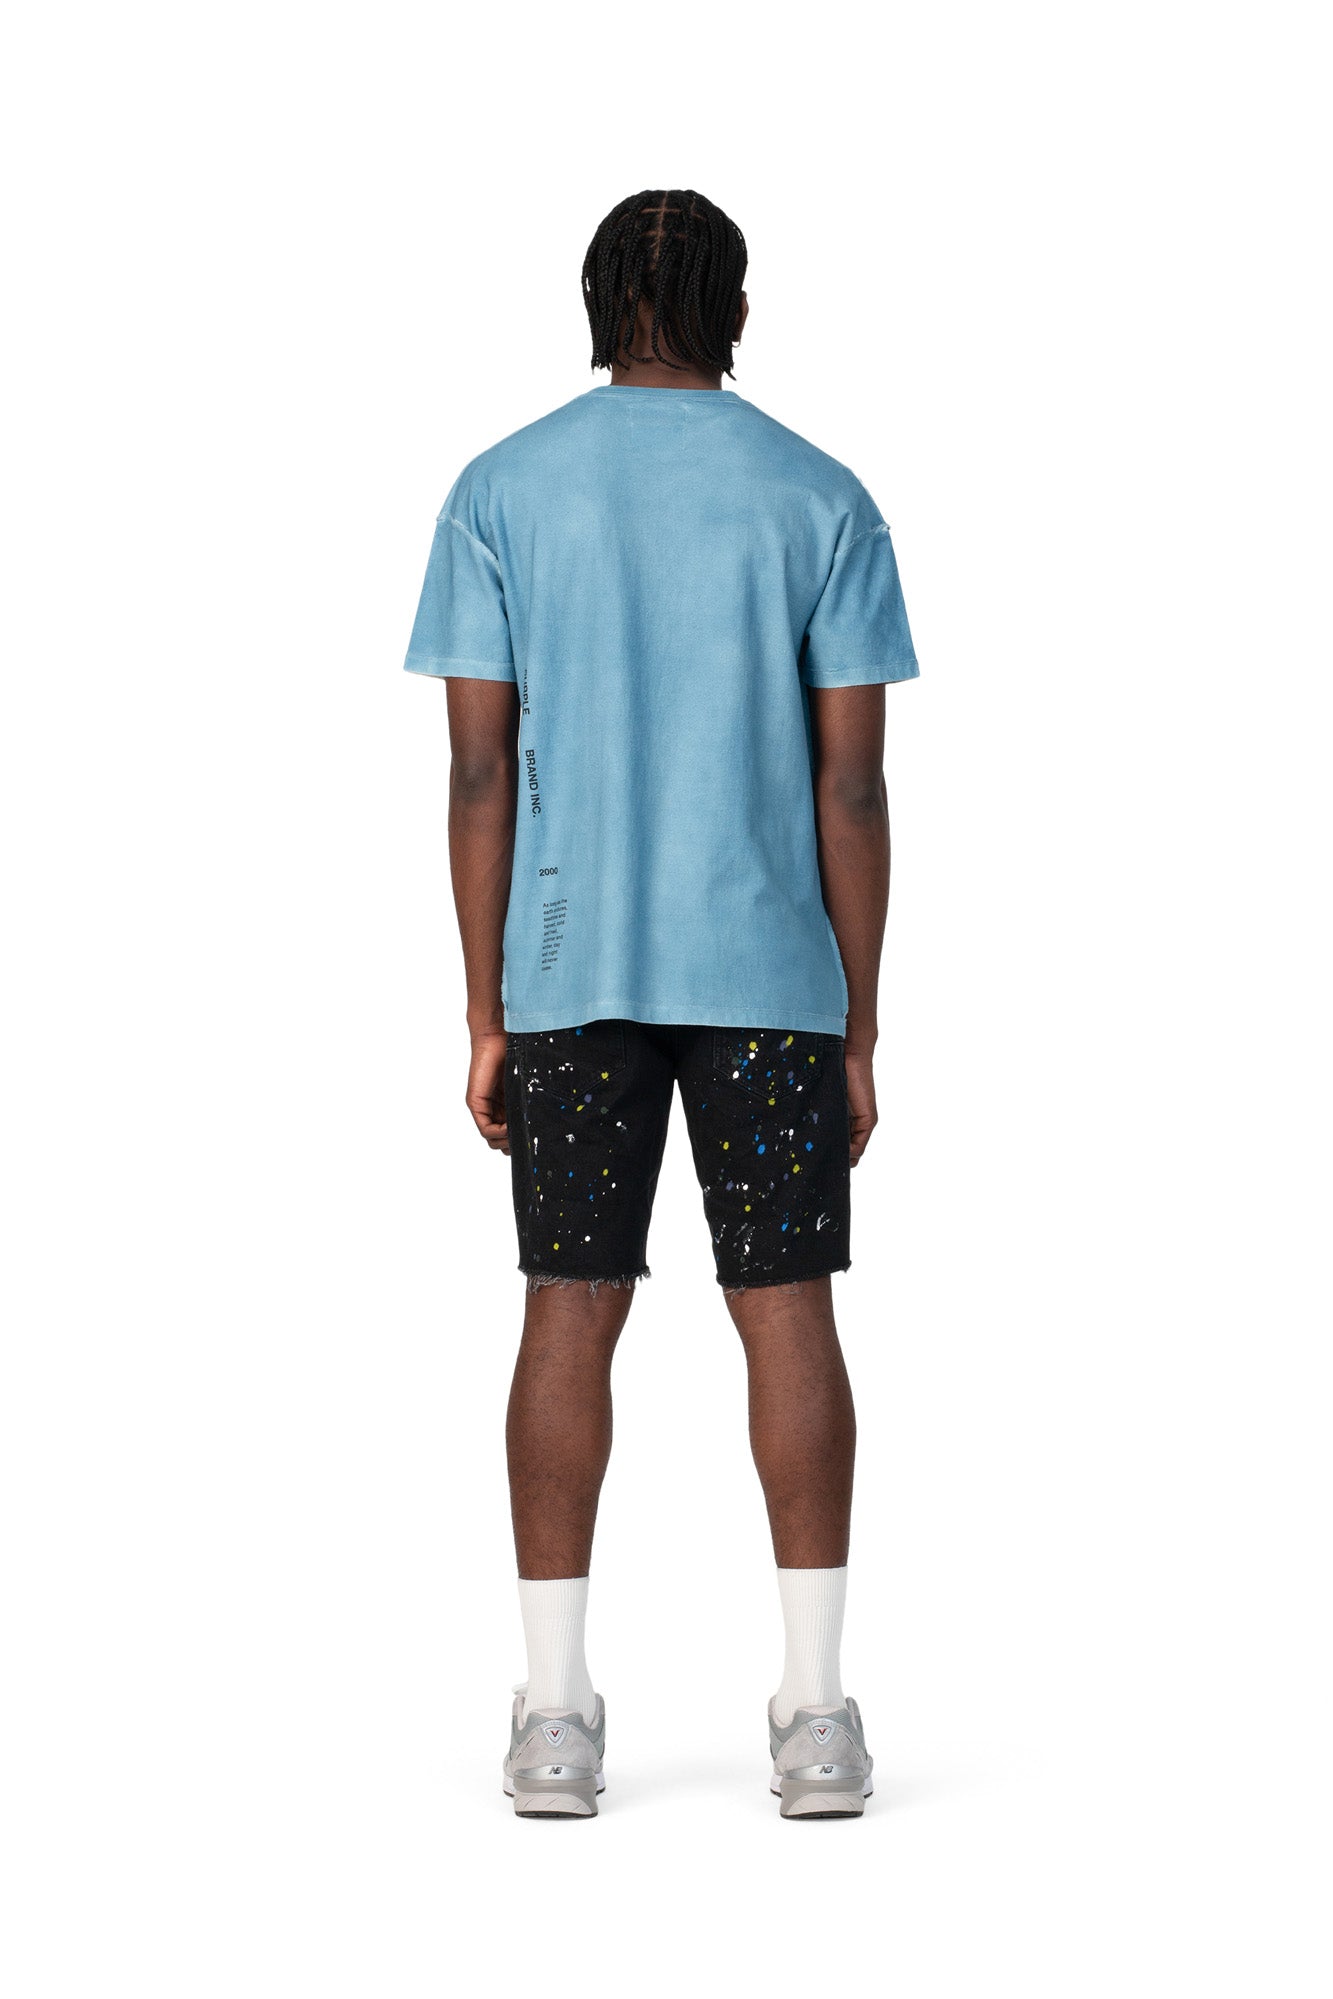 PURPLE BRAND - Men's Denim Jean Short - Mid Rise Short - Style No. P020 - Carpenter Shorts Black - Model Back Pose